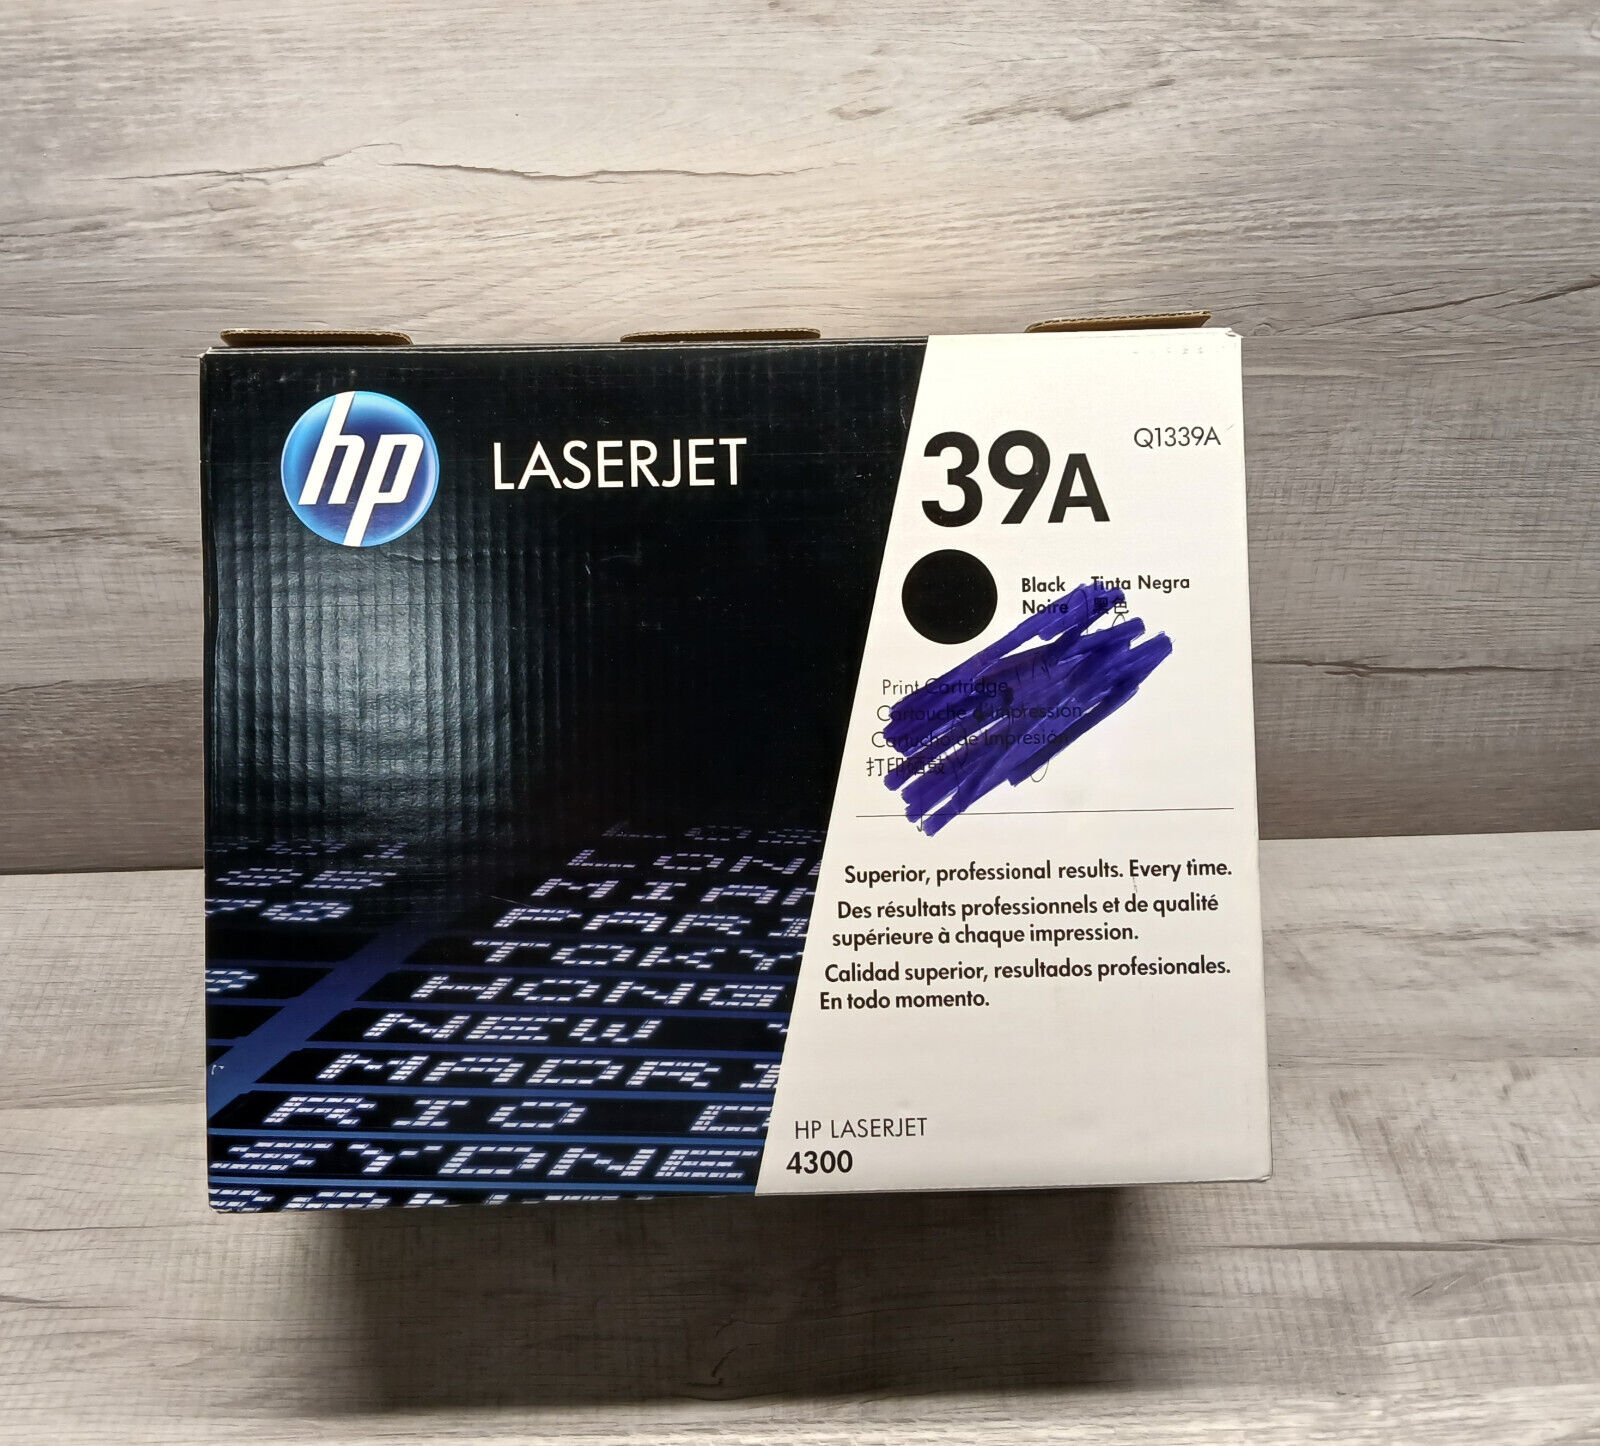 HP LaserJet 39A Q1339A Black Toner Print Cartridge OEM NEW Sealed Pkg - Open Box